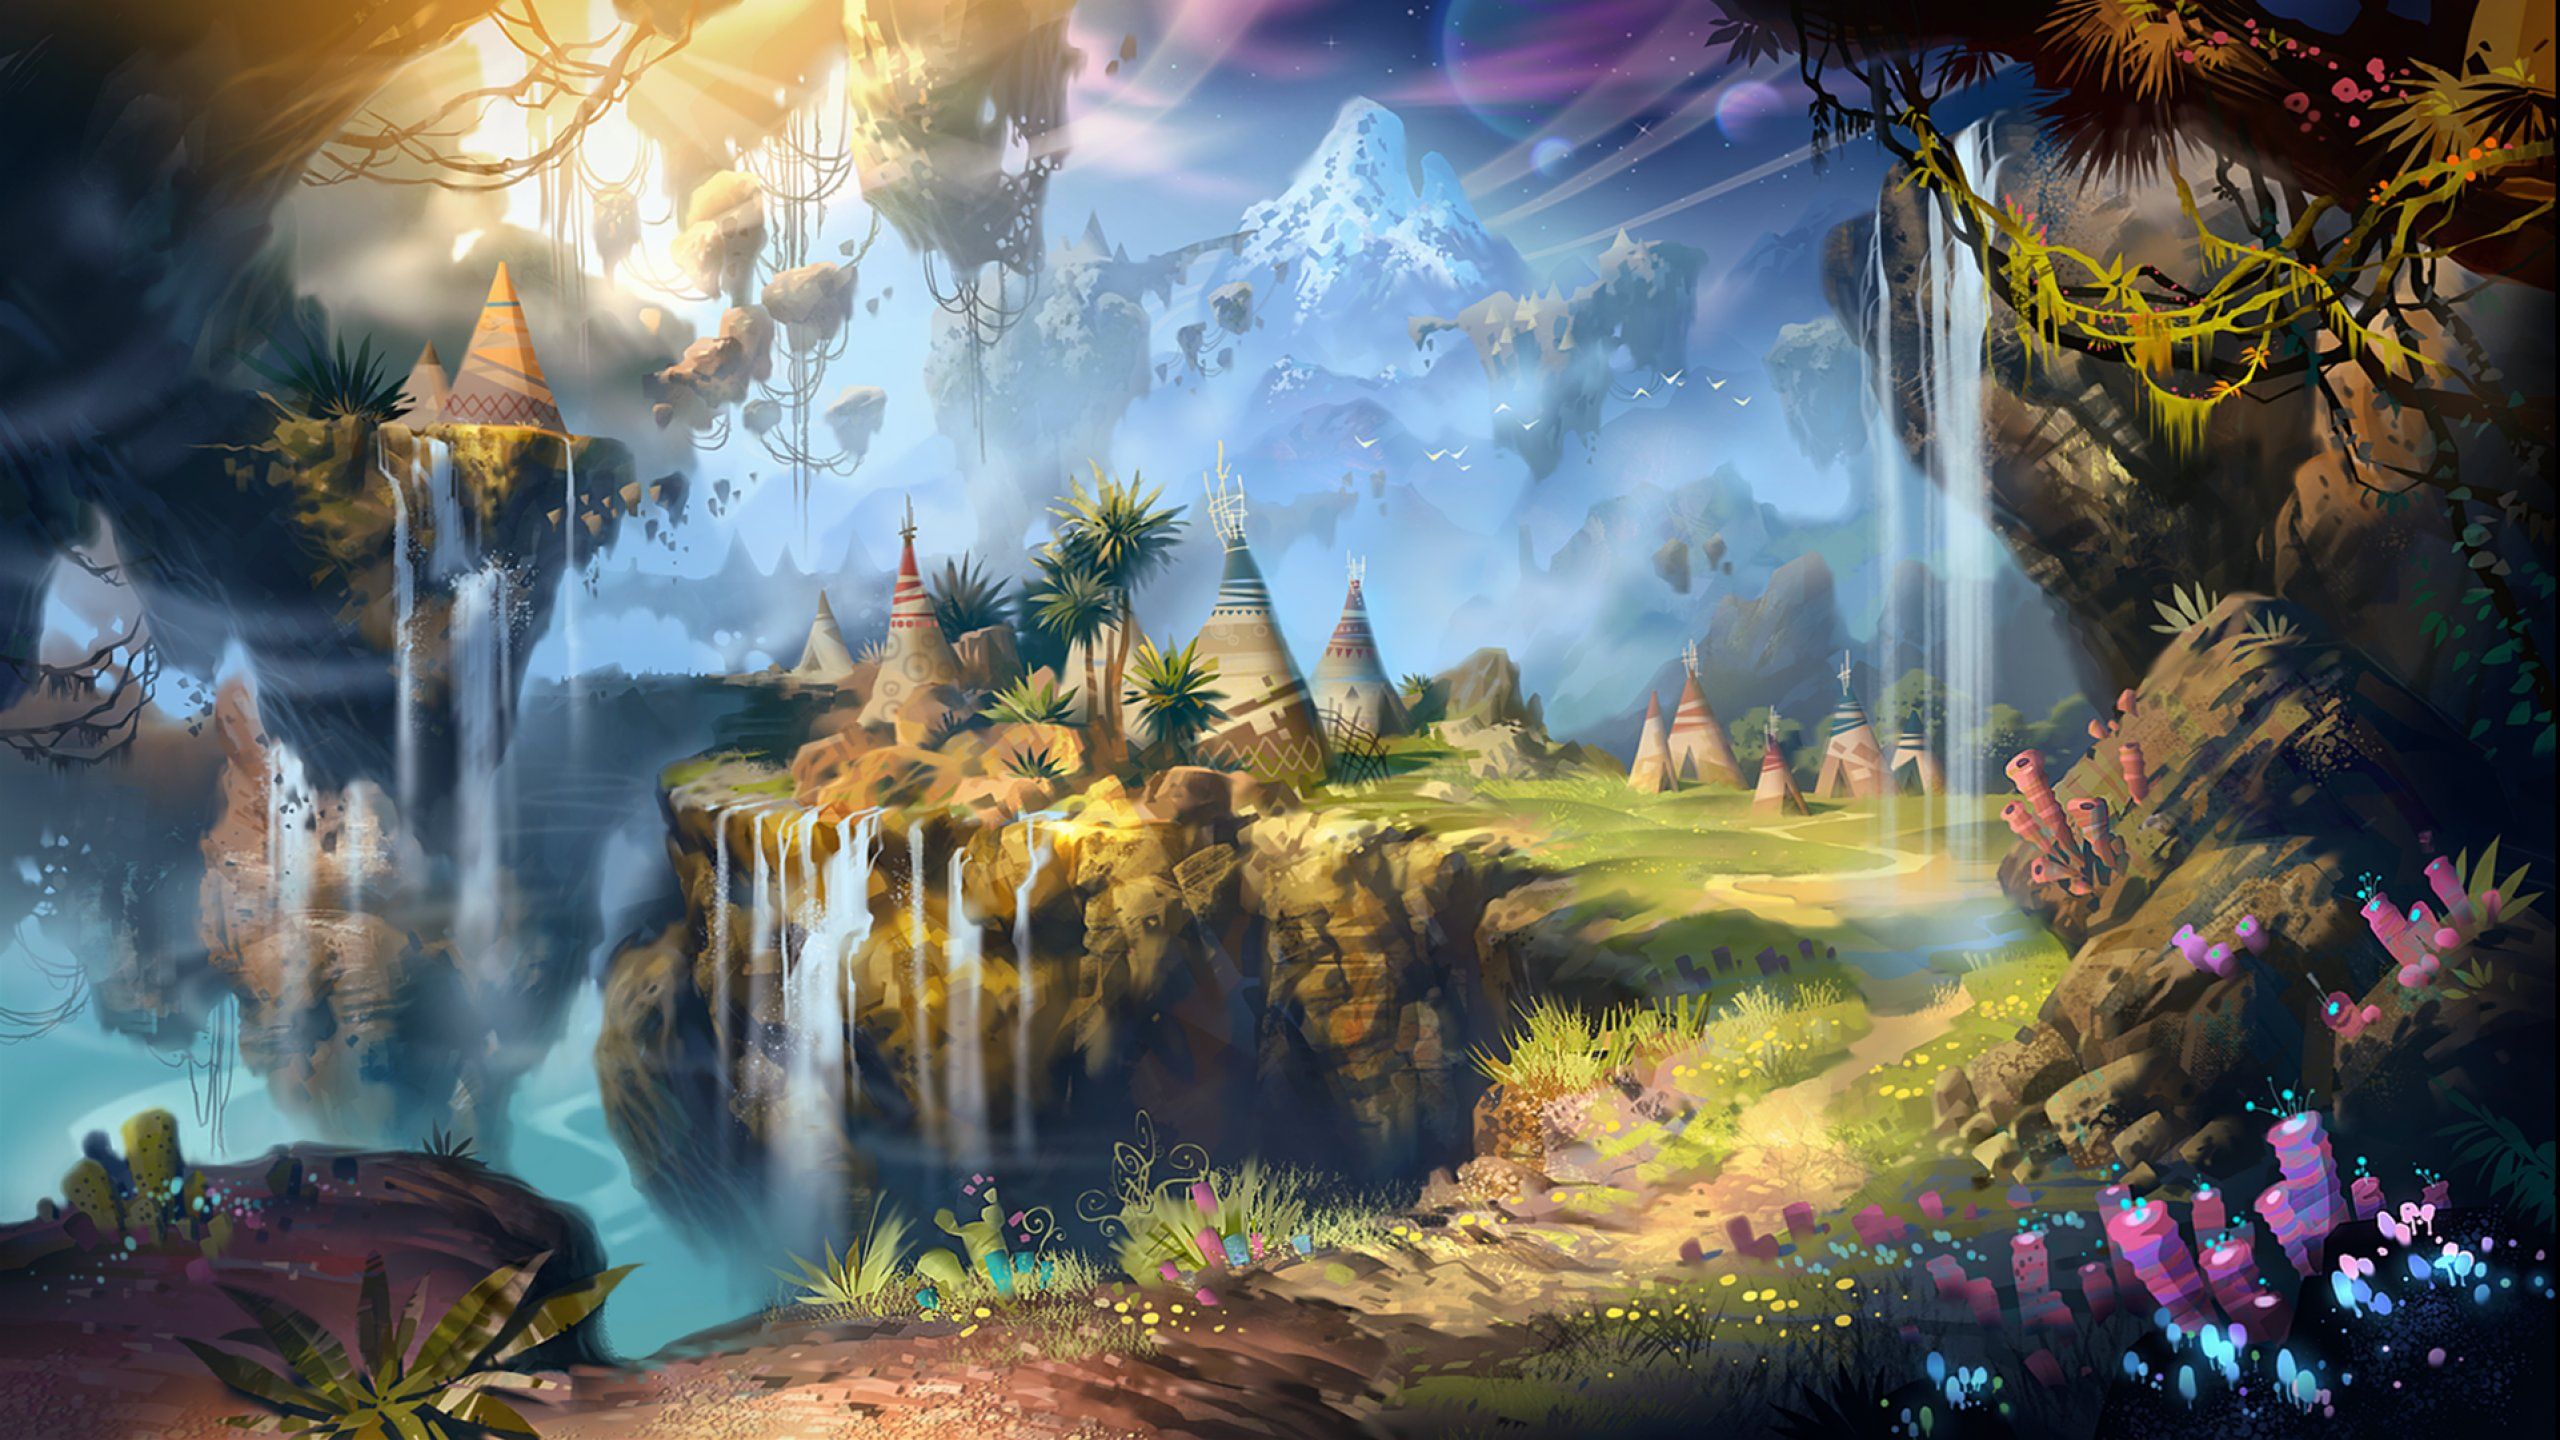 2560x1440 Fantasy Landscape Art Artwork Nature Scenery Wallpaper Hd Desktop And Mobile Background